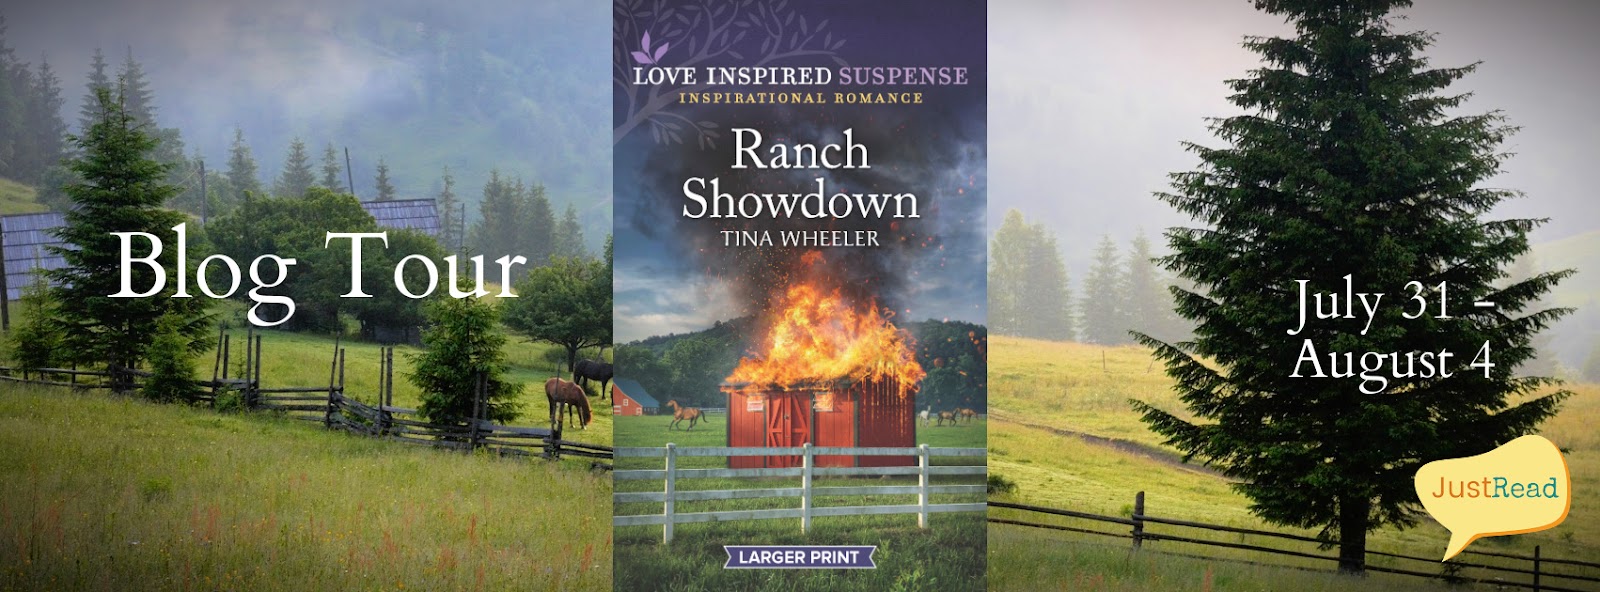 Ranch Showdown JustRead Blog Tour